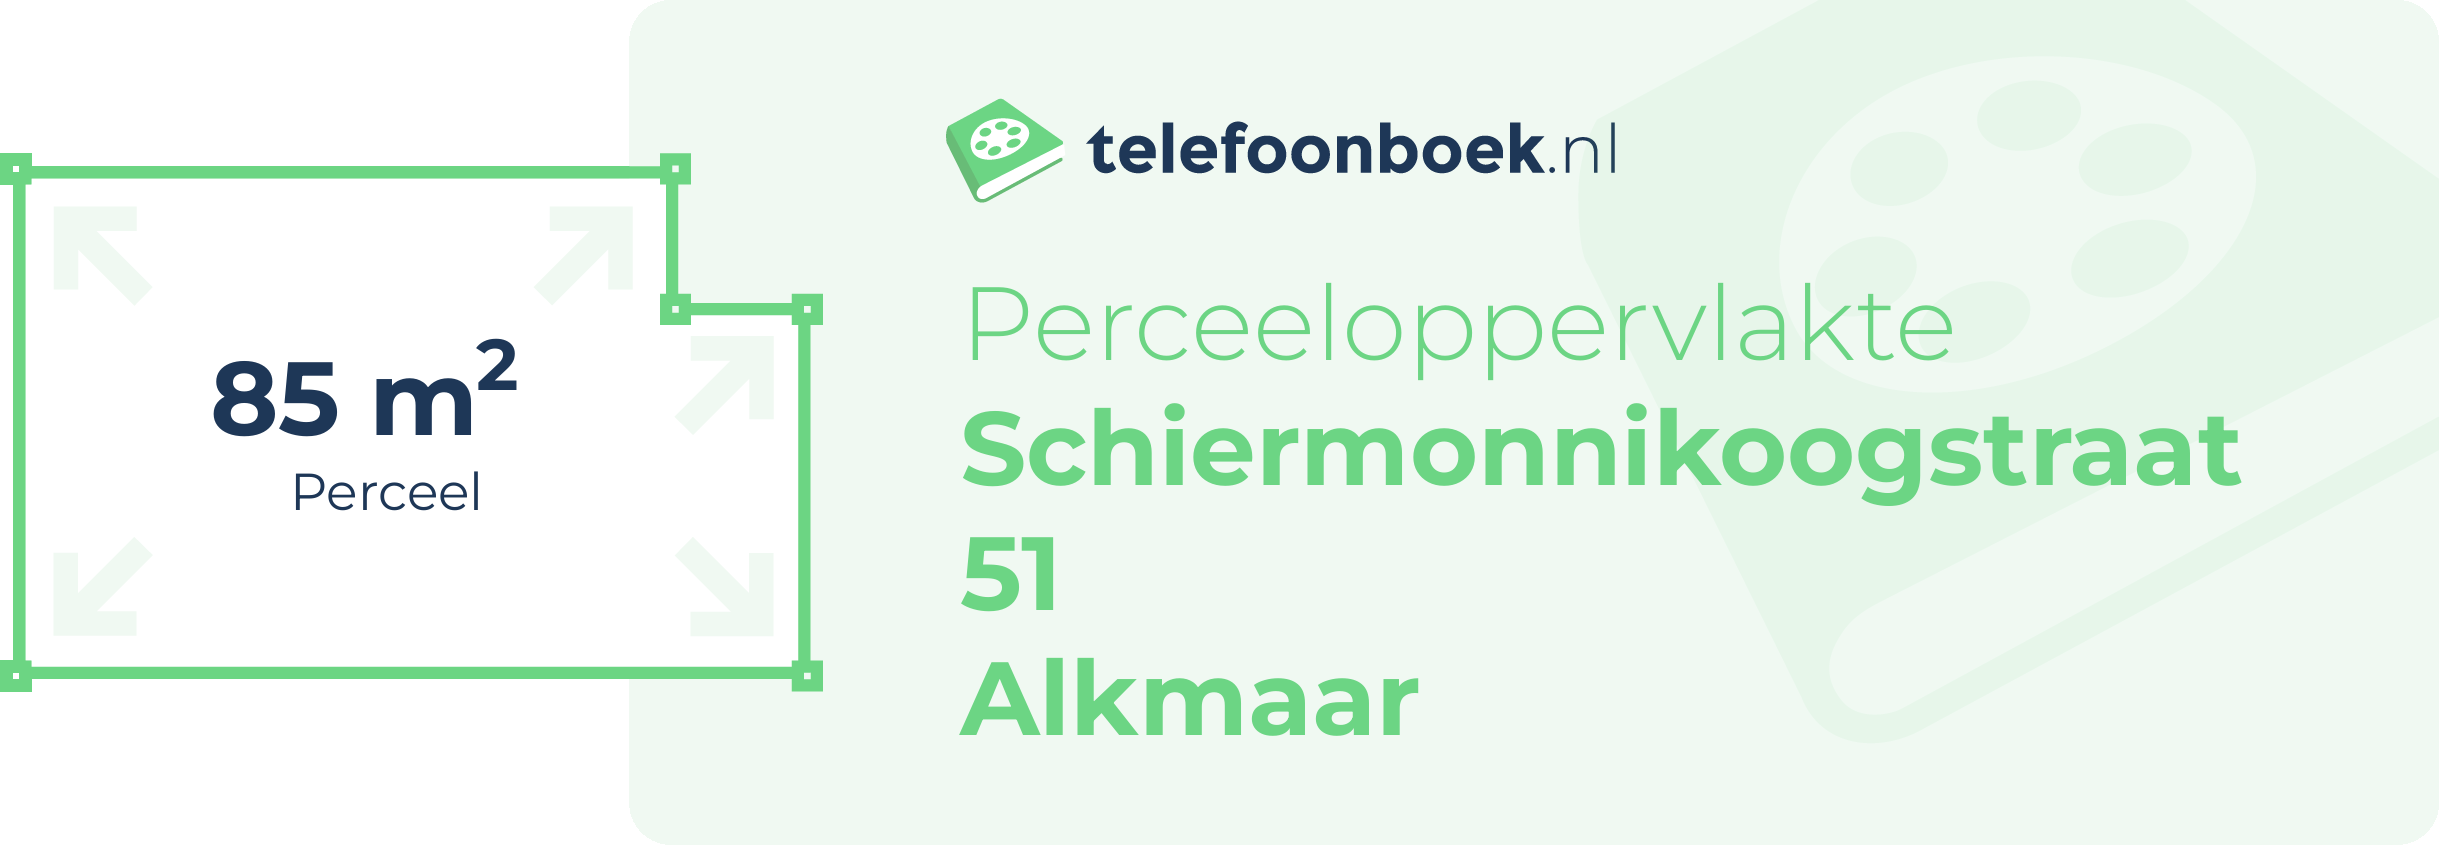 Perceeloppervlakte Schiermonnikoogstraat 51 Alkmaar